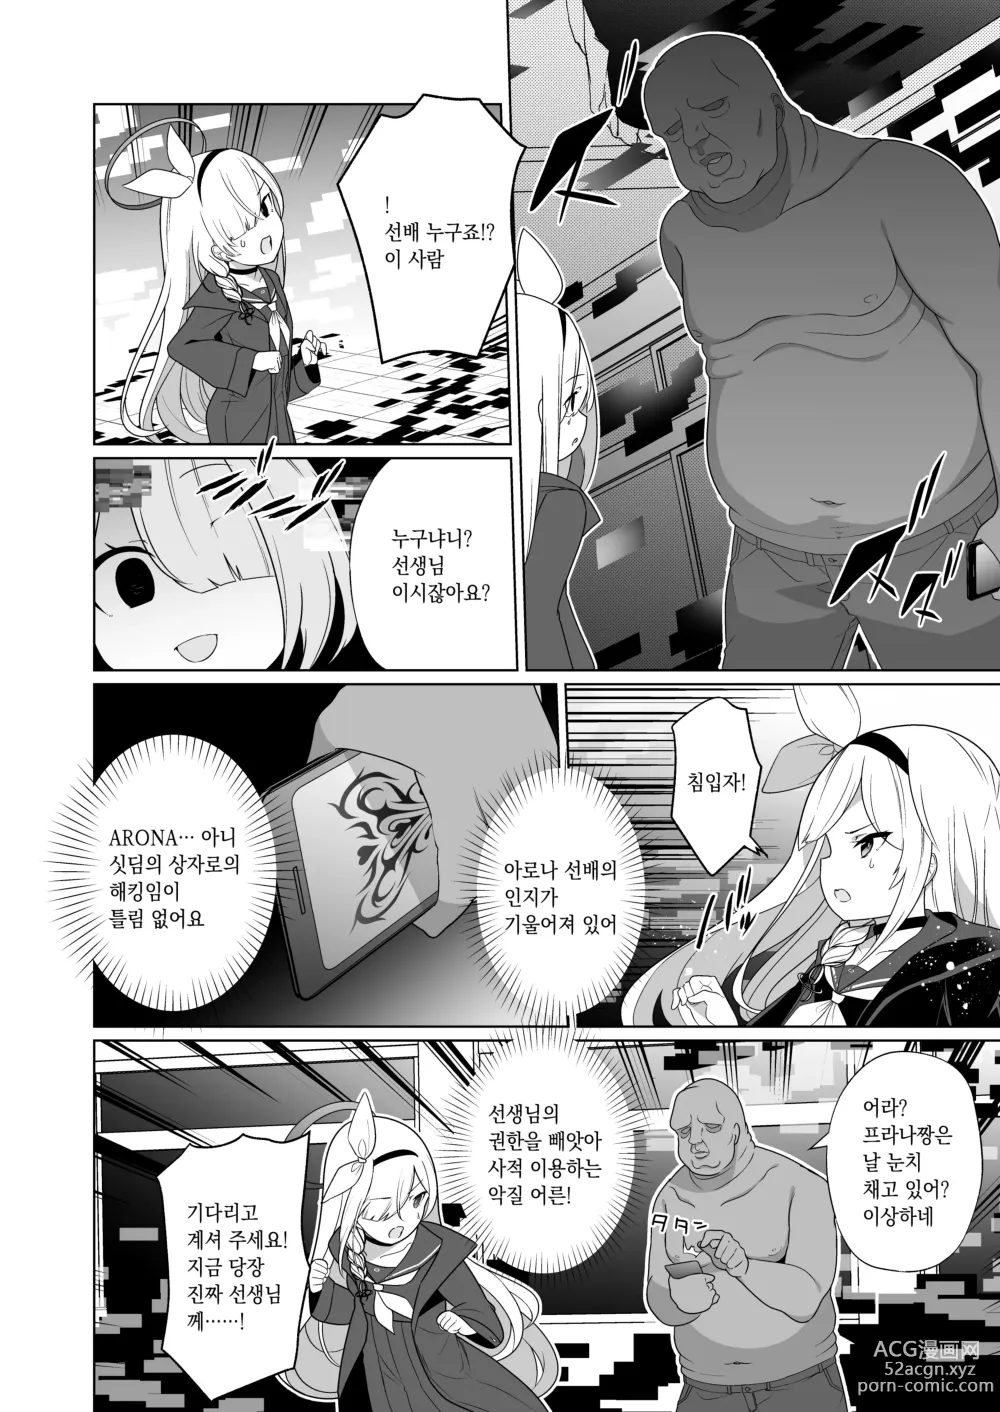 Page 5 of doujinshi 싫어하는 프라나가 기꺼이 봉사하는 이야기